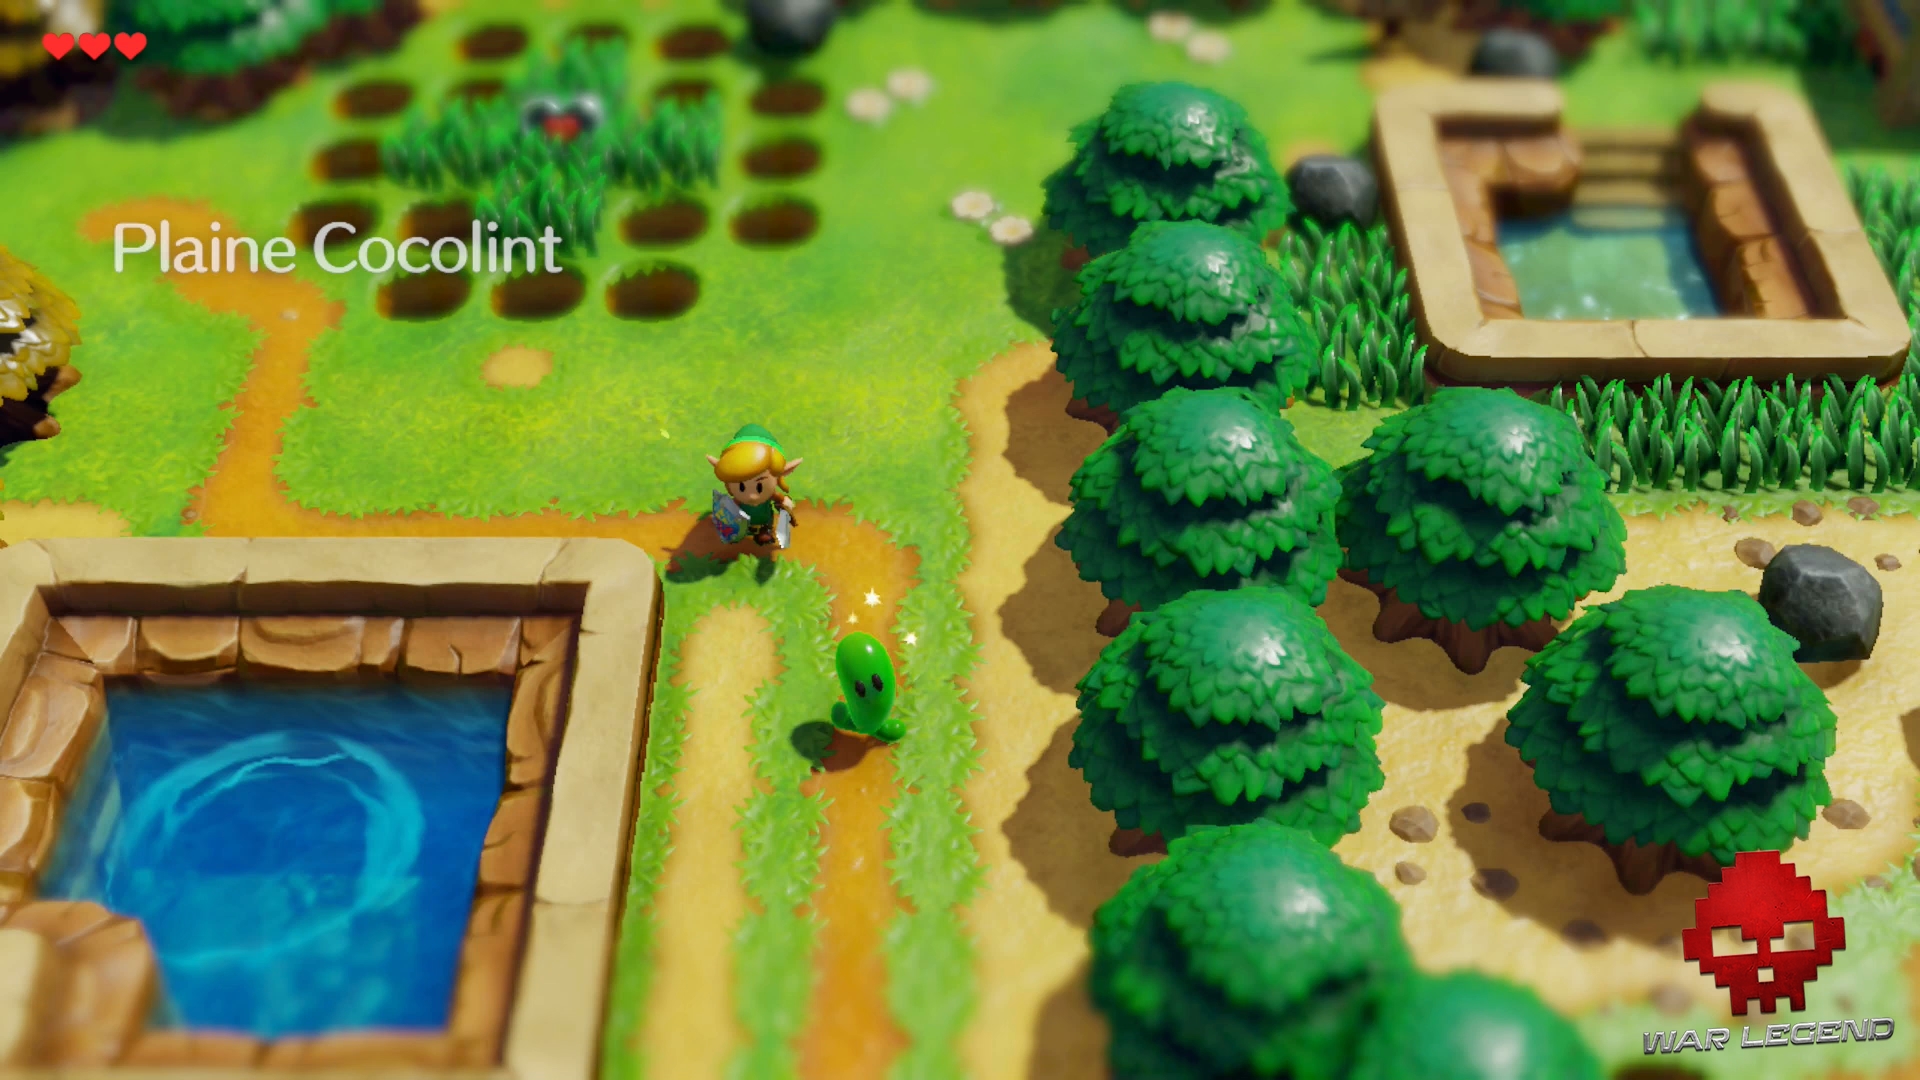 Test The Legend of Zelda: Link's Awakening - Plaine Cocolint